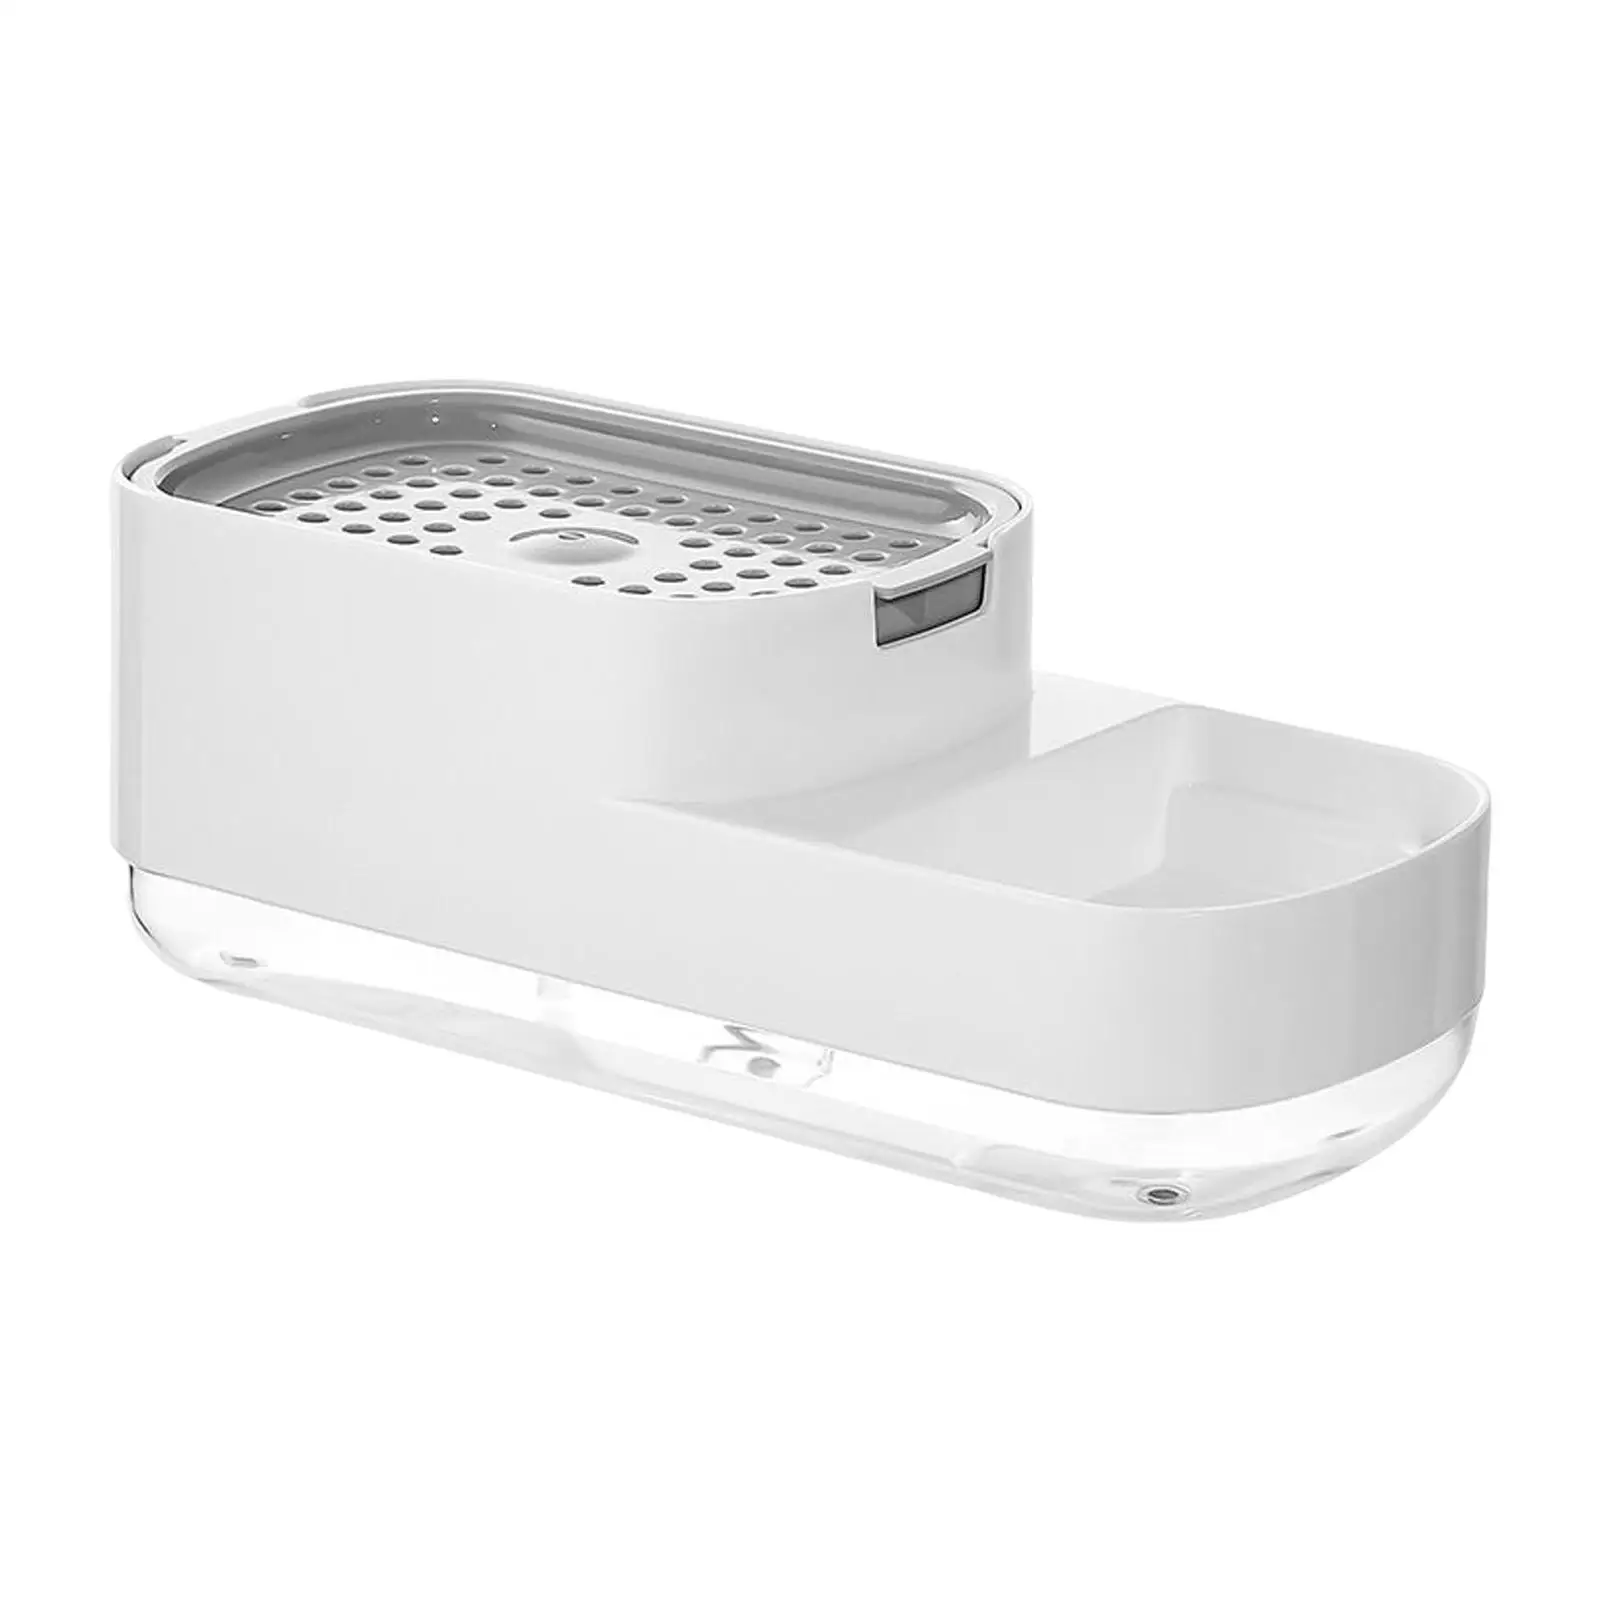 Dish Soap Dispenser Refillable Caddy Organizer Large Capacity for Bathroom